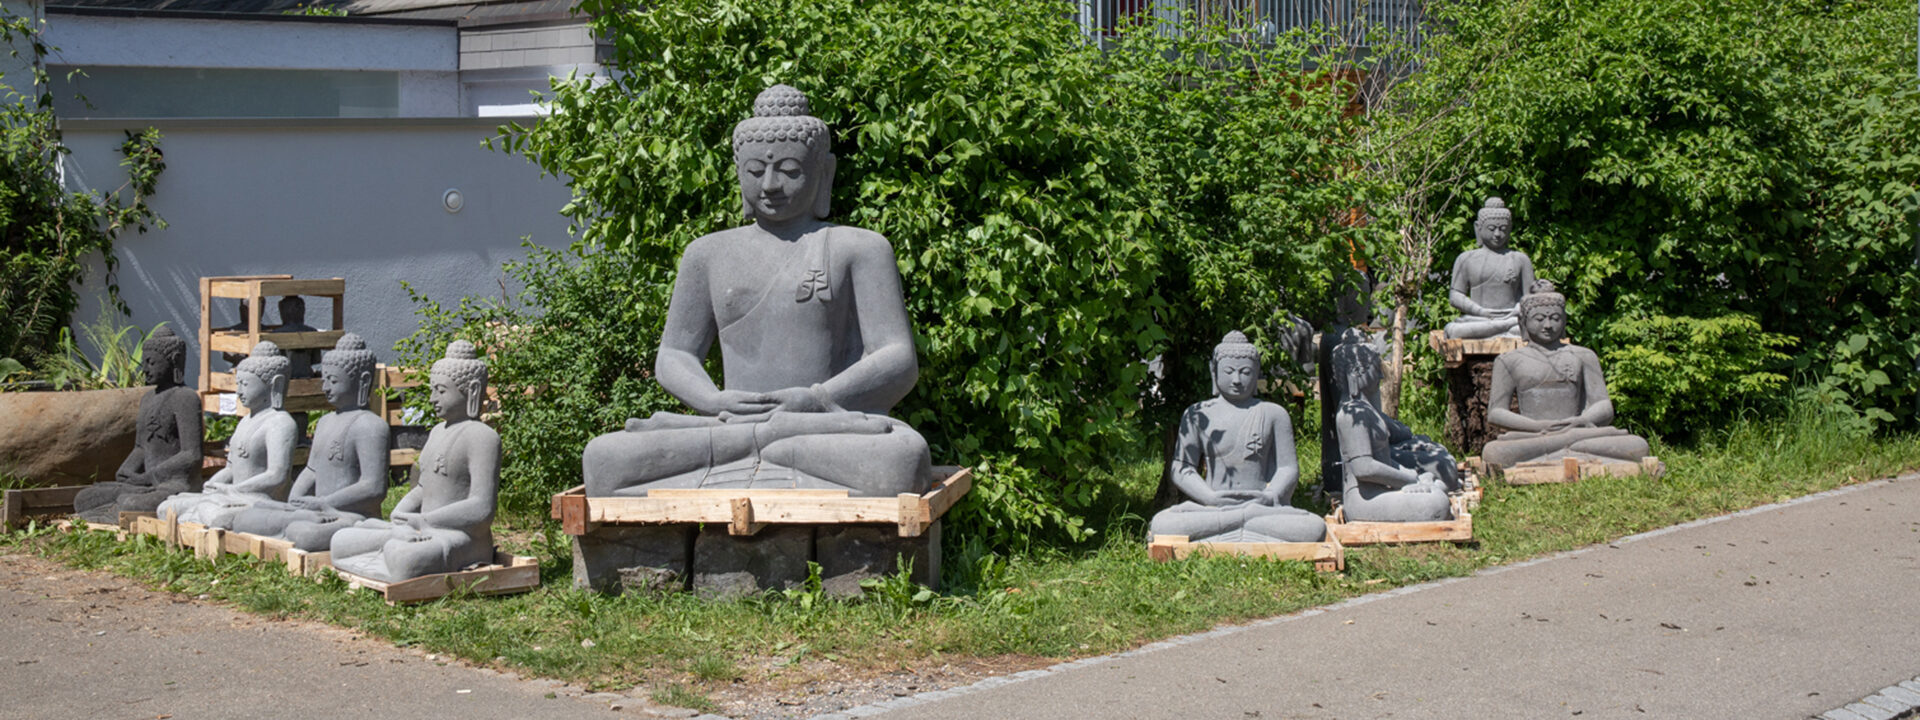 Sliderbild: Buddhas Grösse